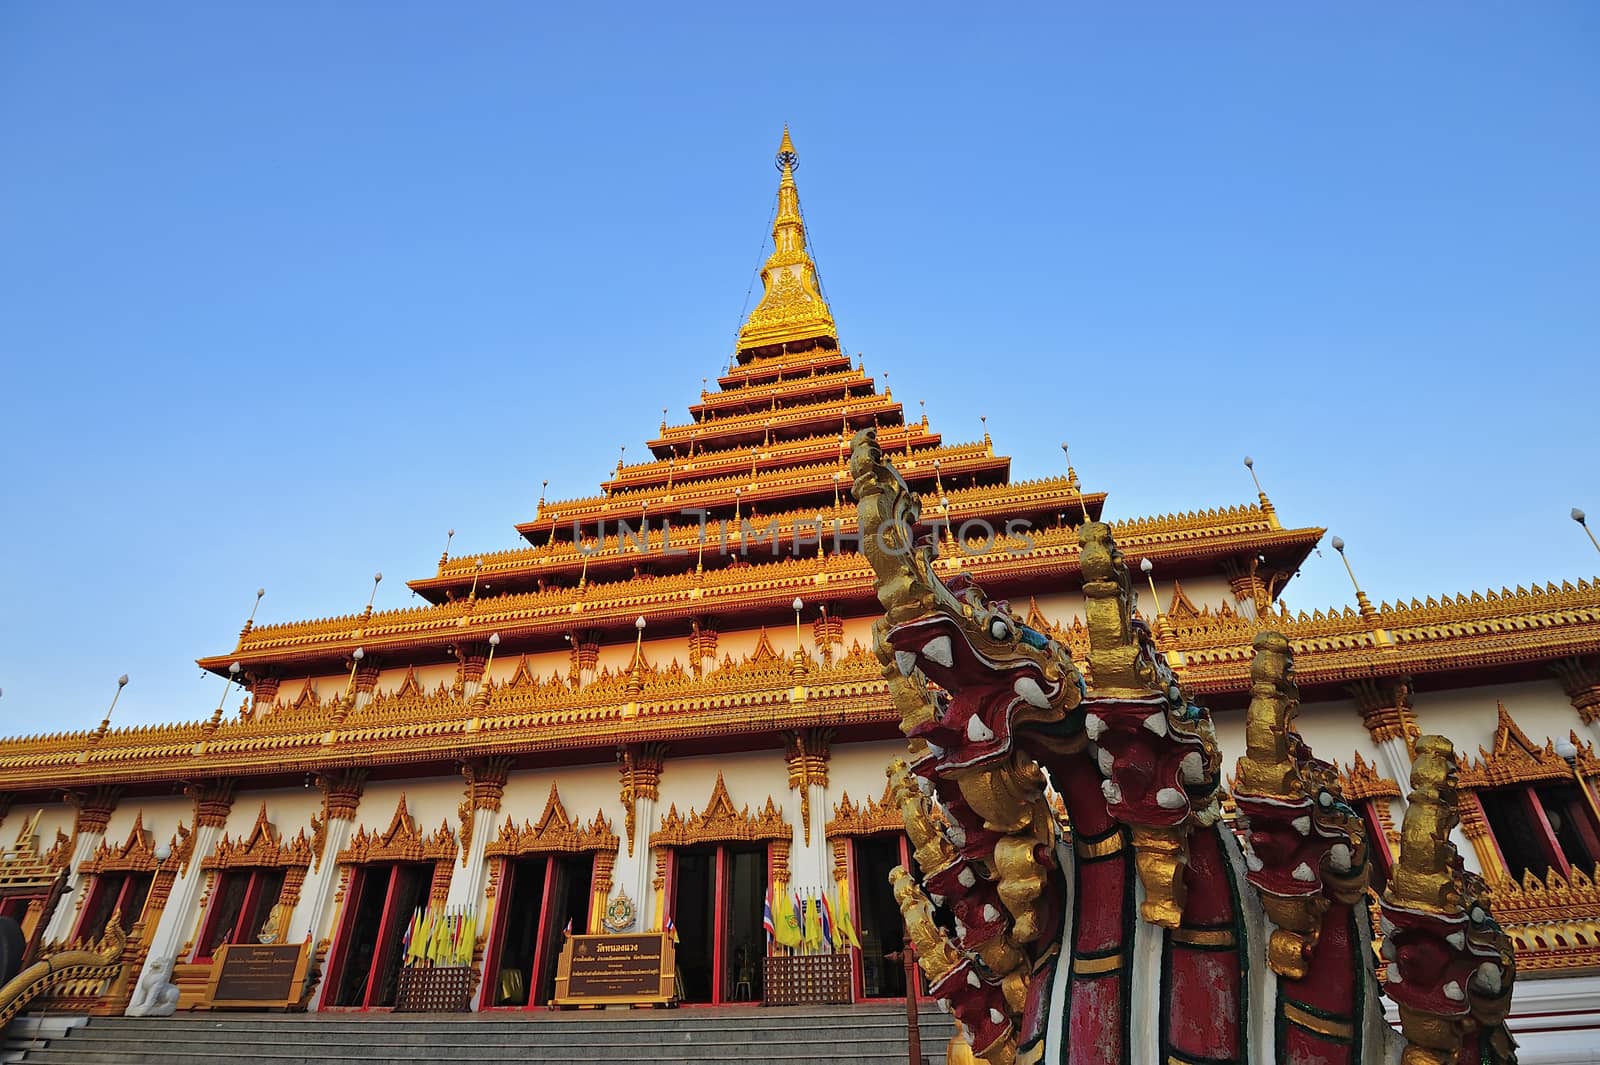 Golden pagoda at Wat Nong Wang temple, Khonkaen Thailand